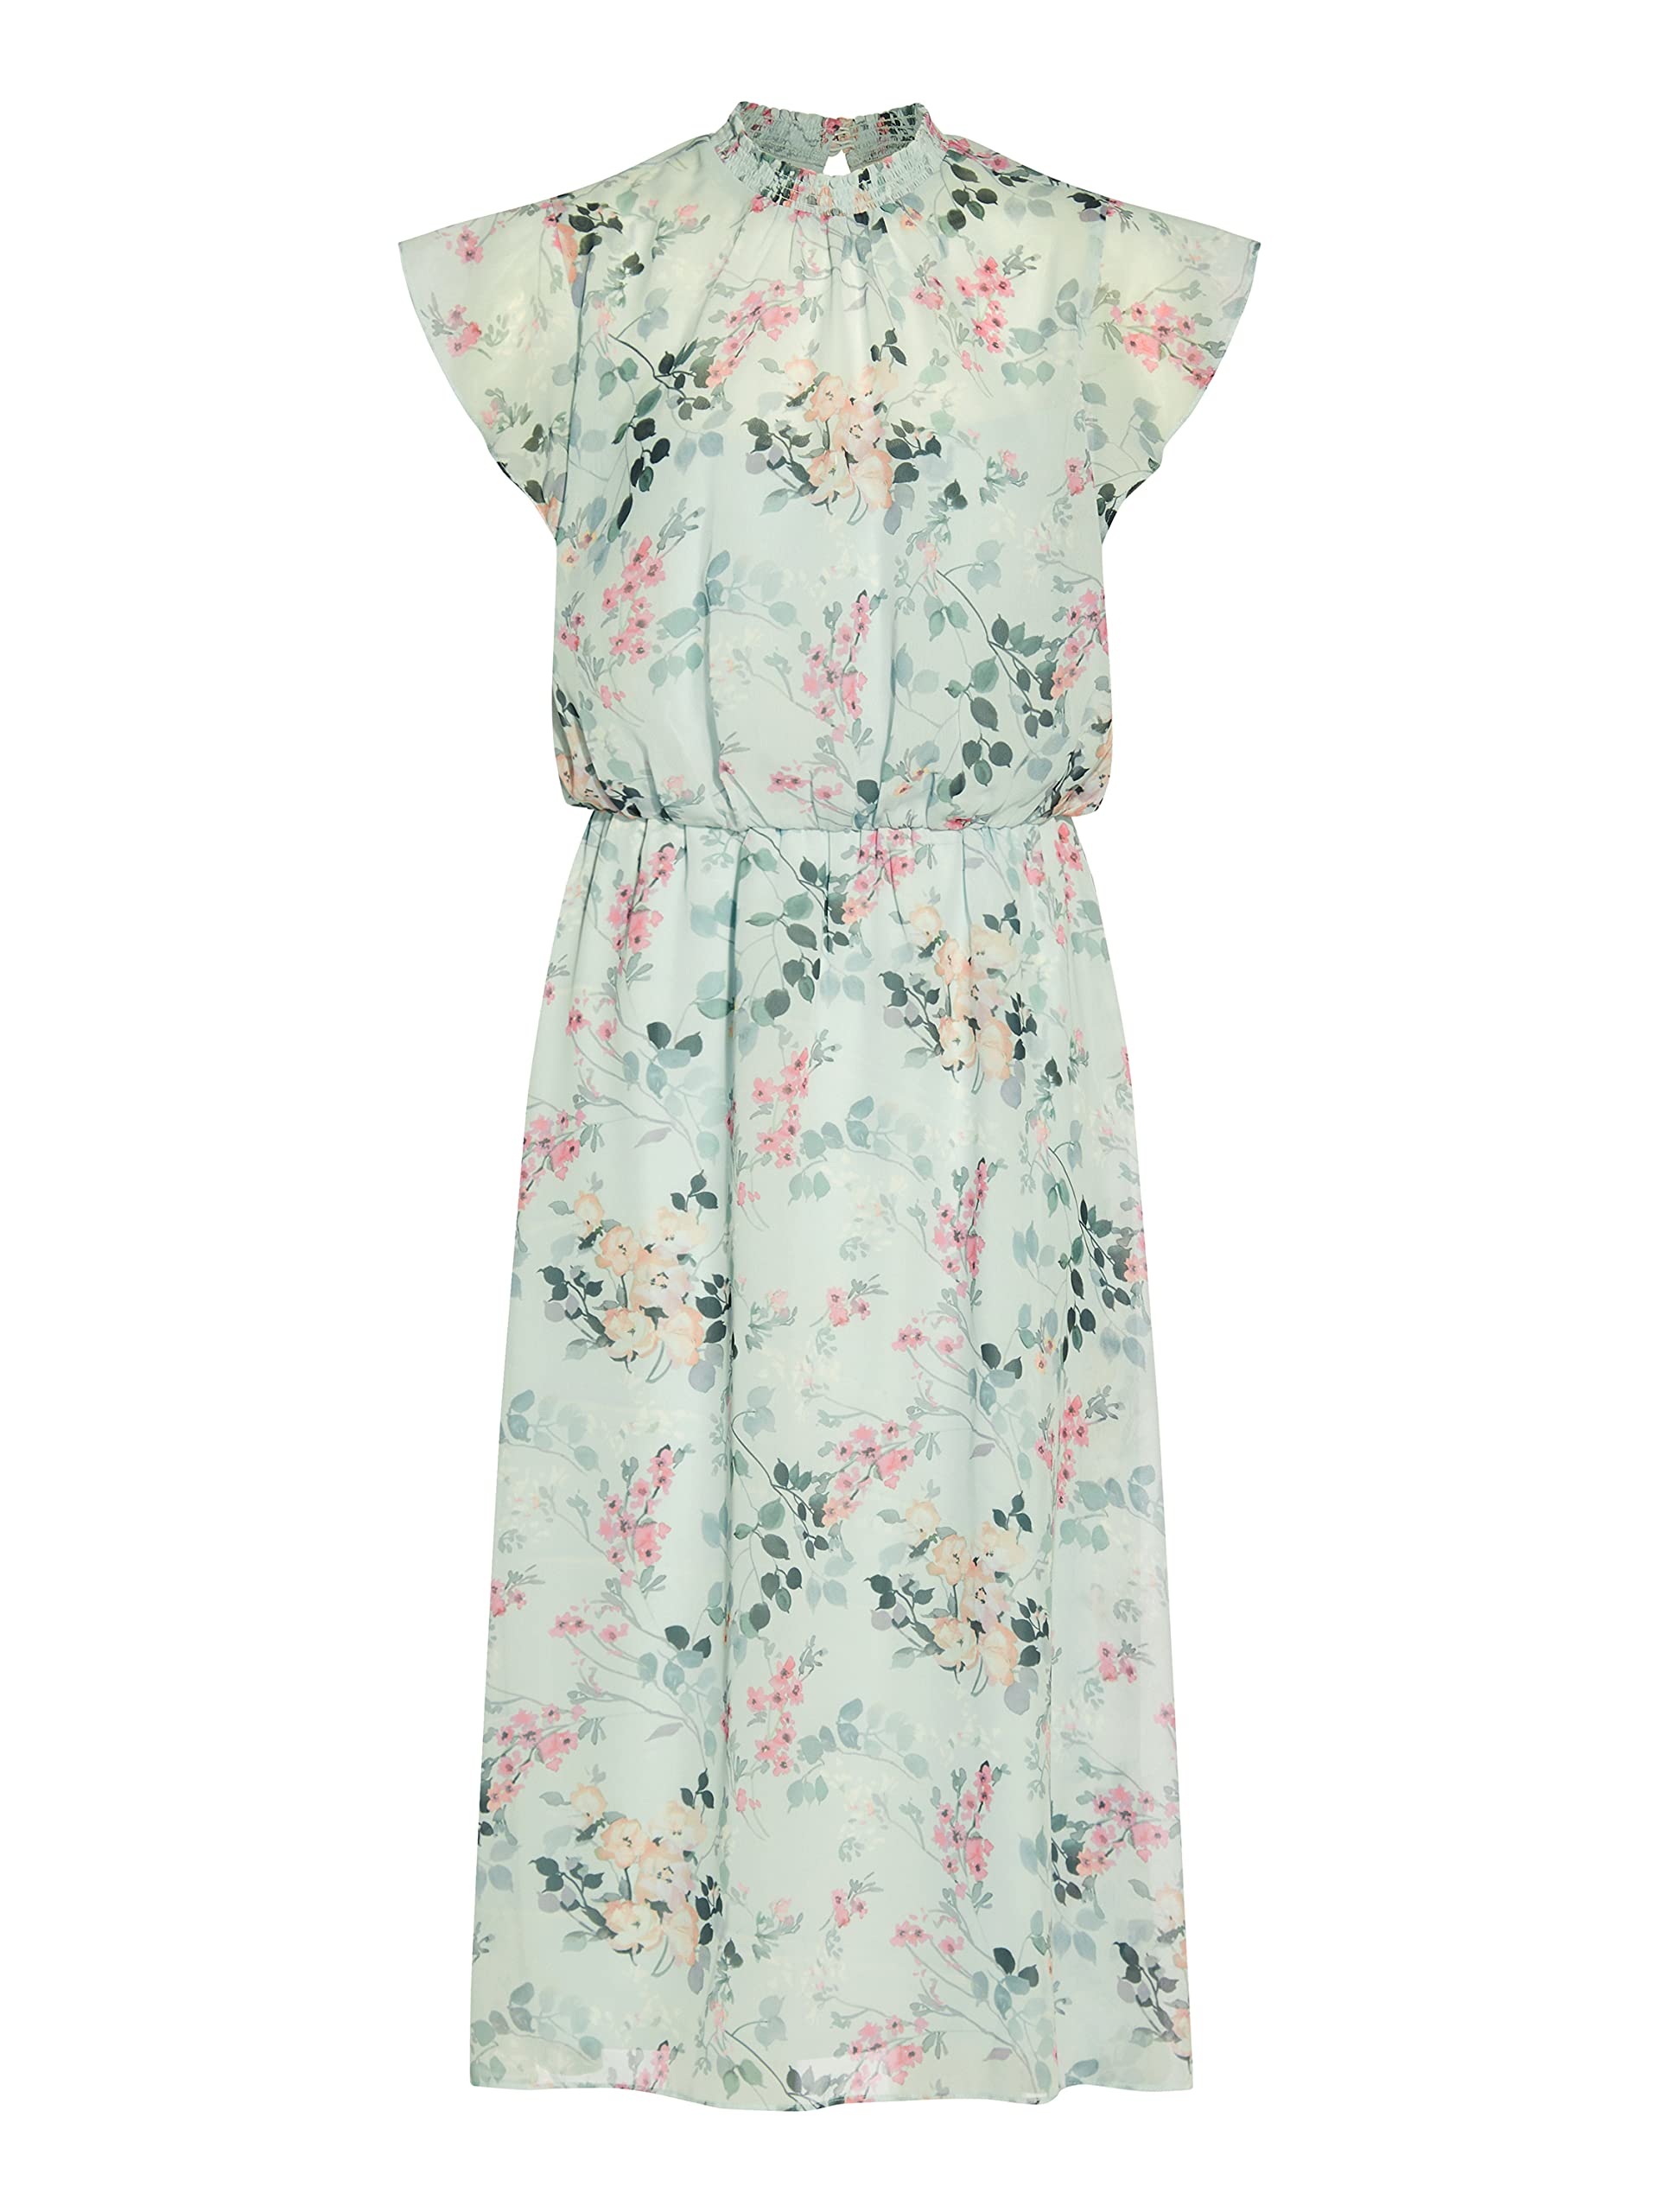 Adrianna Papell Women's Short Printed Chiffon Dress